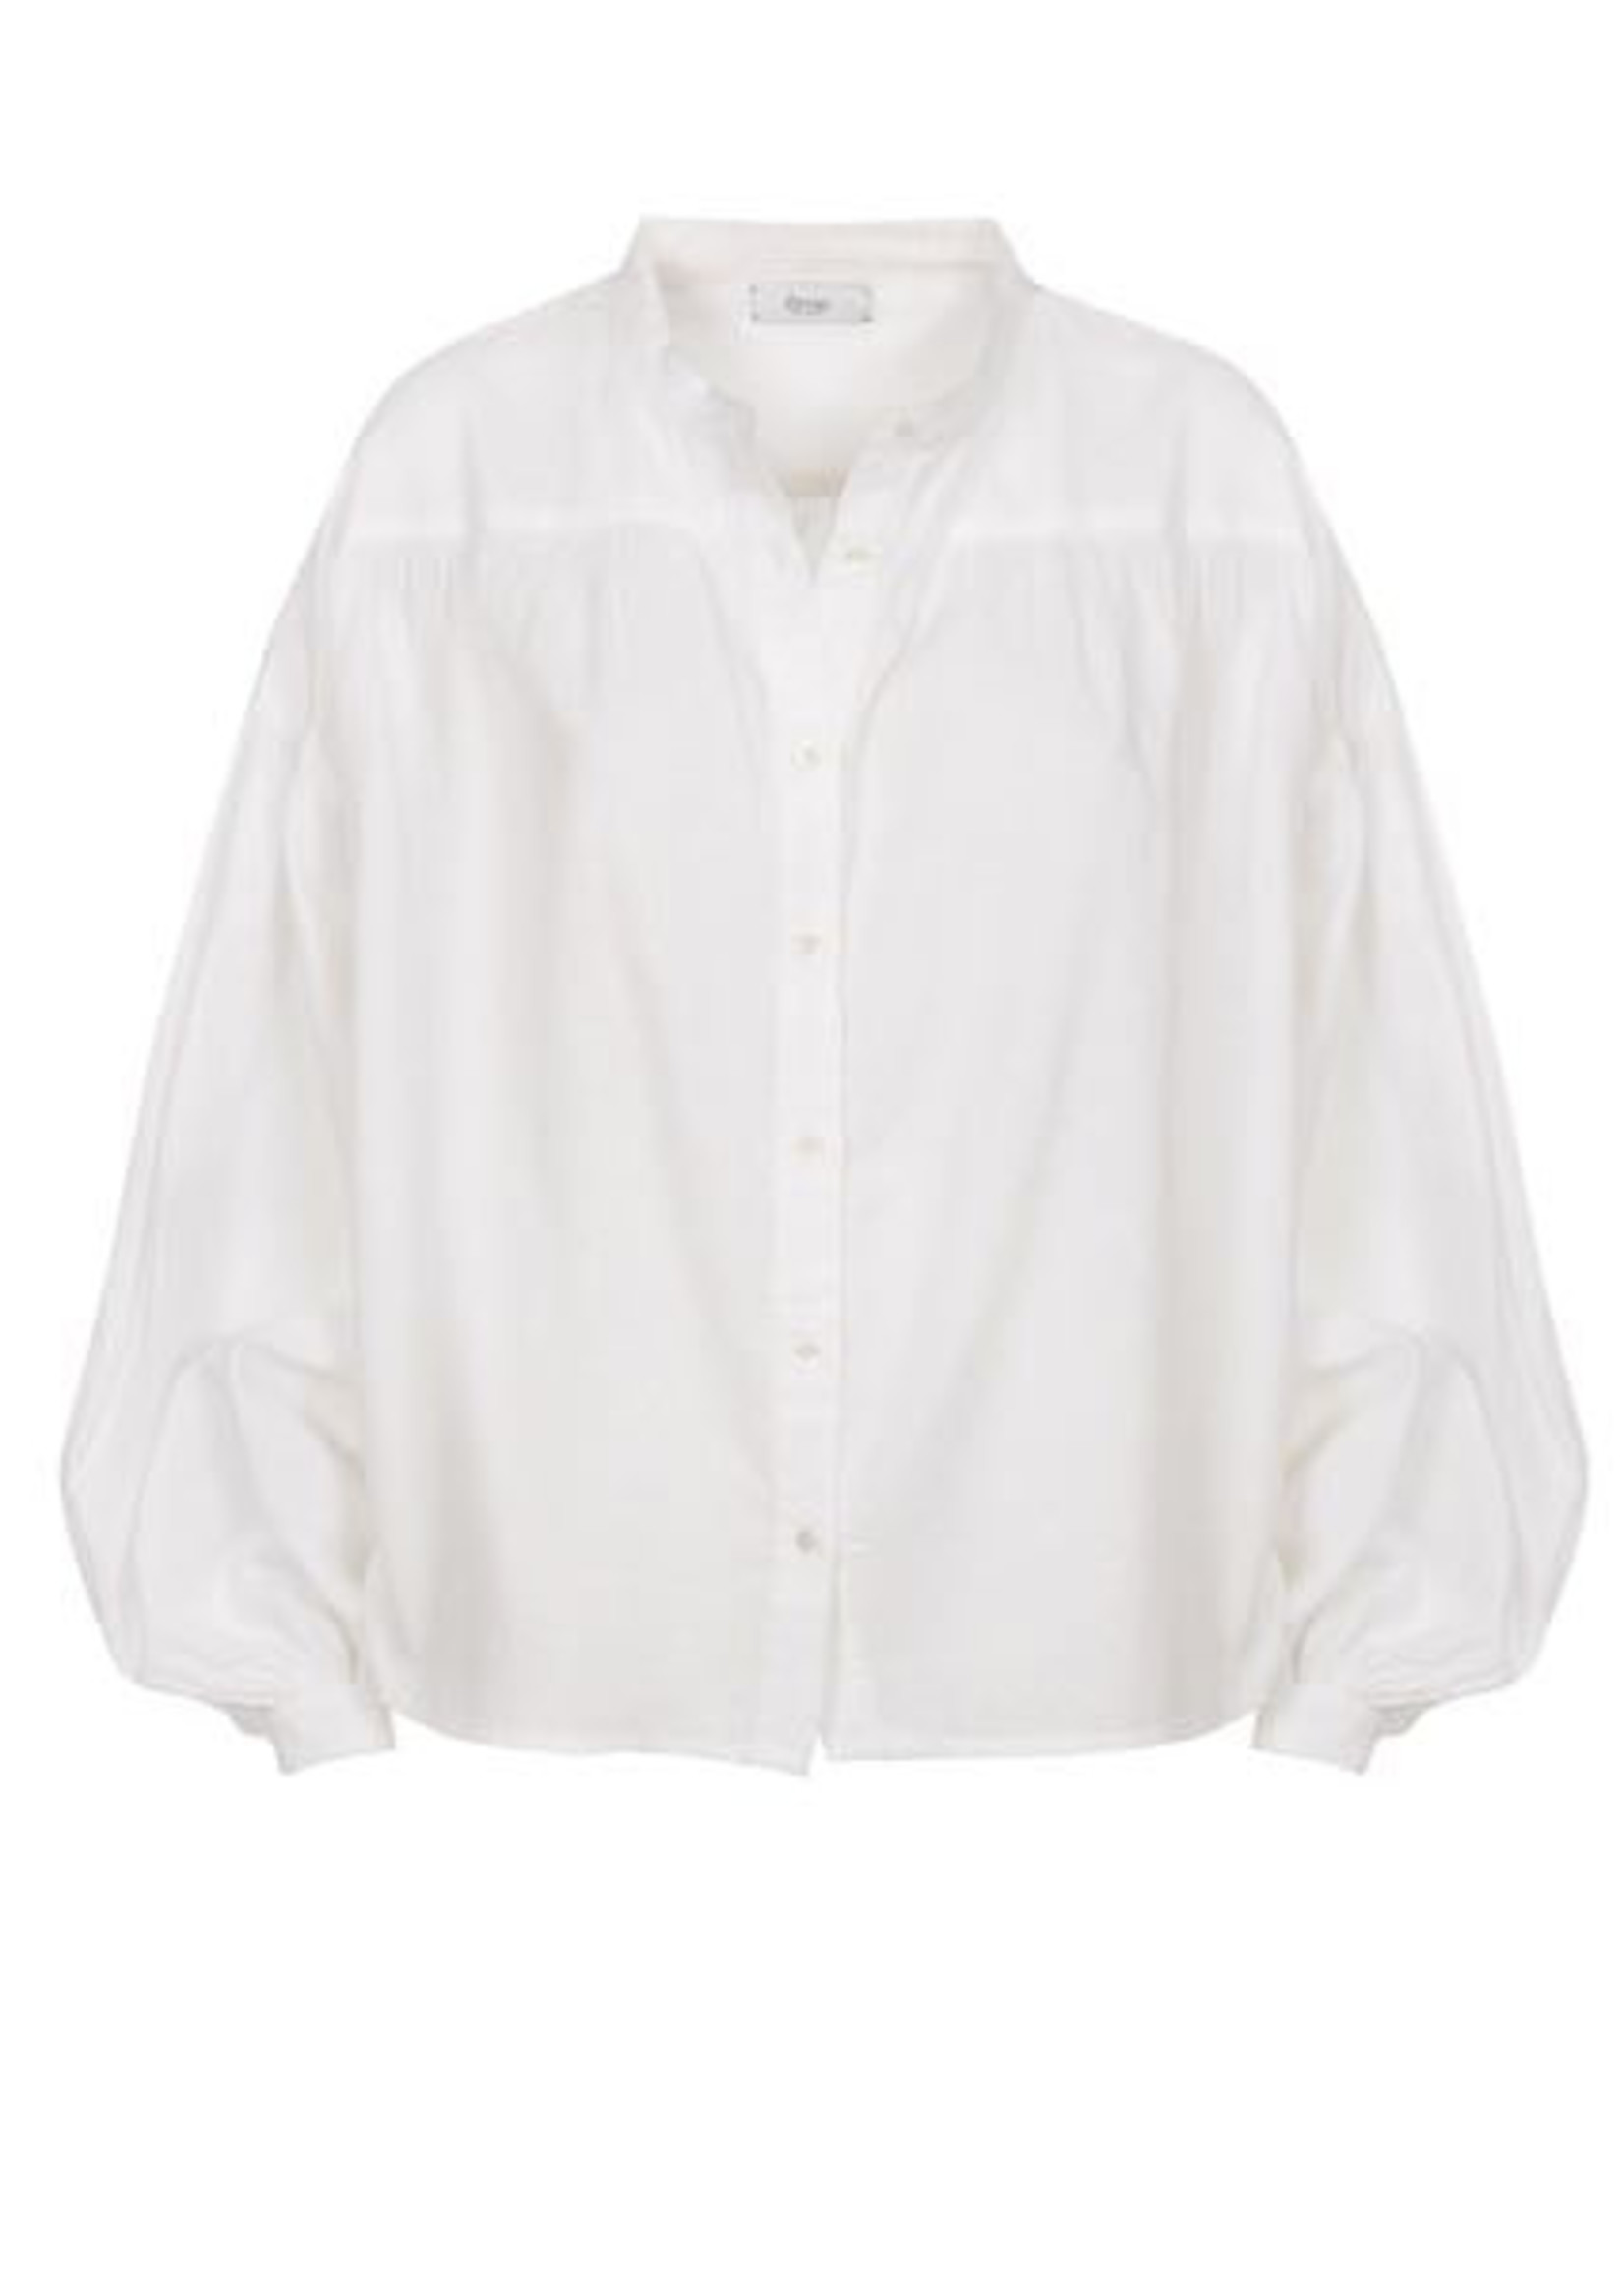 Ame Ame antwerp Dante shirt w Mao collar , puff sleeves , off white